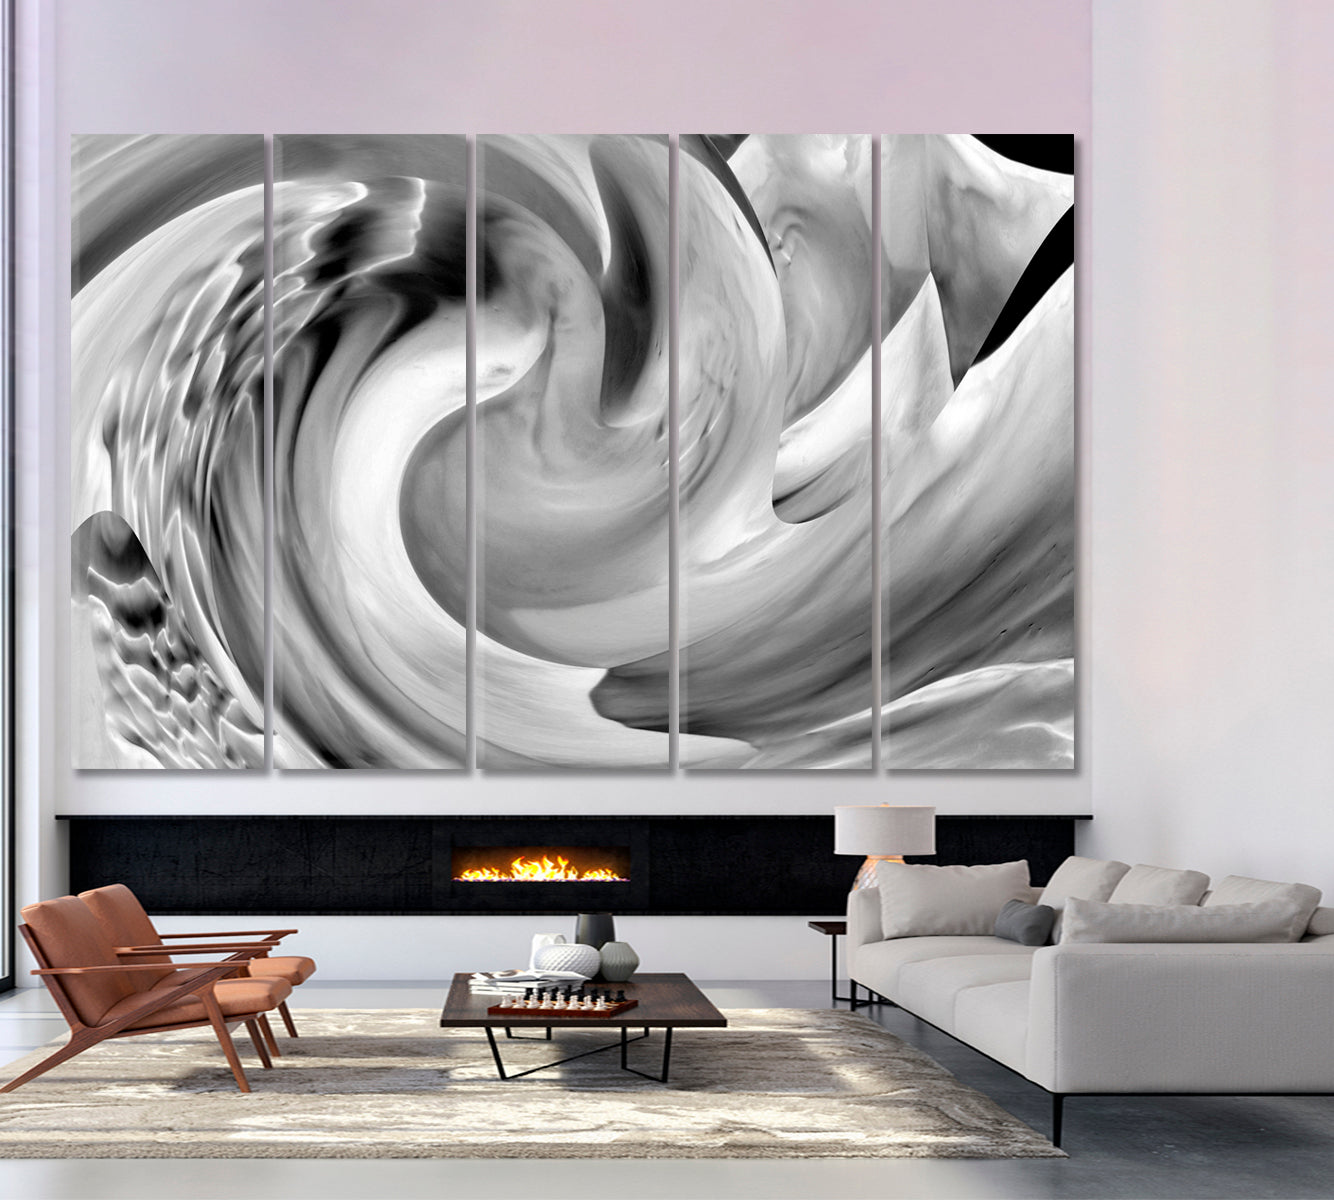 YIN YANG Symbol Vortex Abstract Wave B & W Black and White Wall Art Print Artesty 5 panels 36" x 24" 